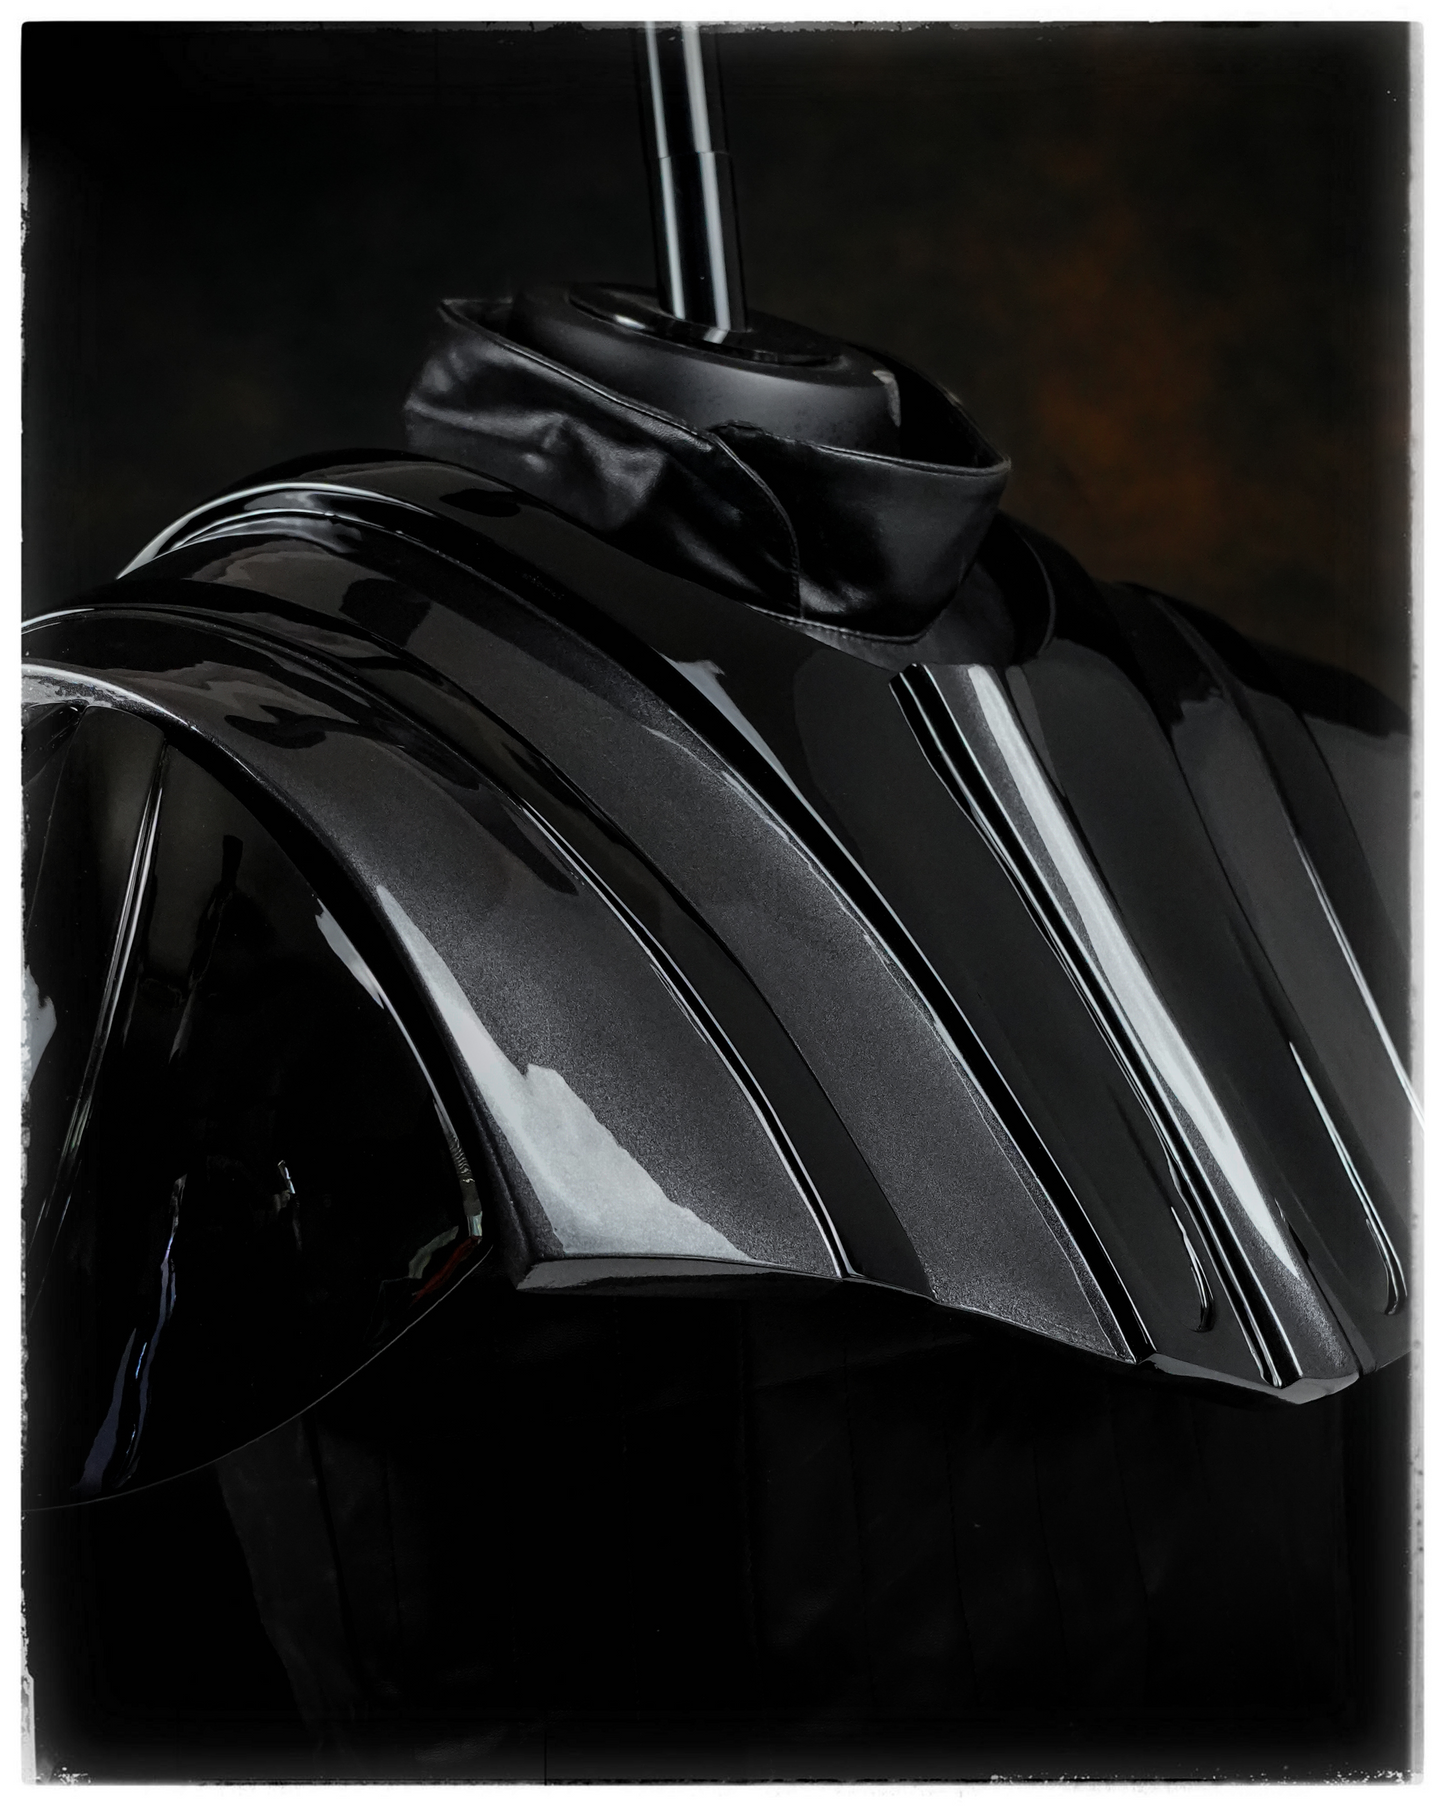 Empire Strikes Back Armor Set (SALE)